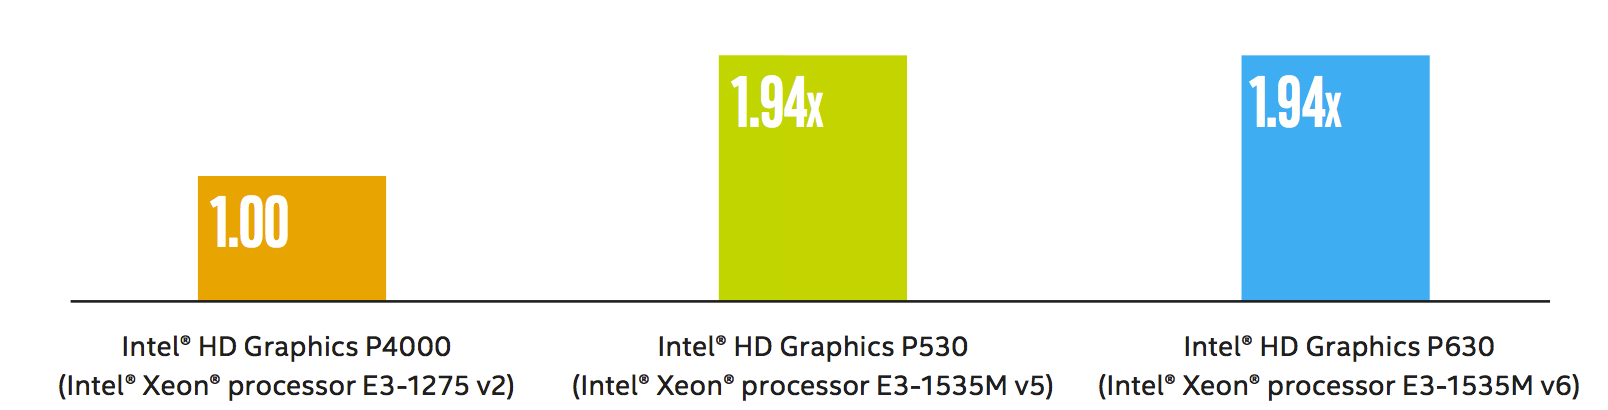 Intel Uhd Graphics 615 Vs Intel Hd Graphics P630